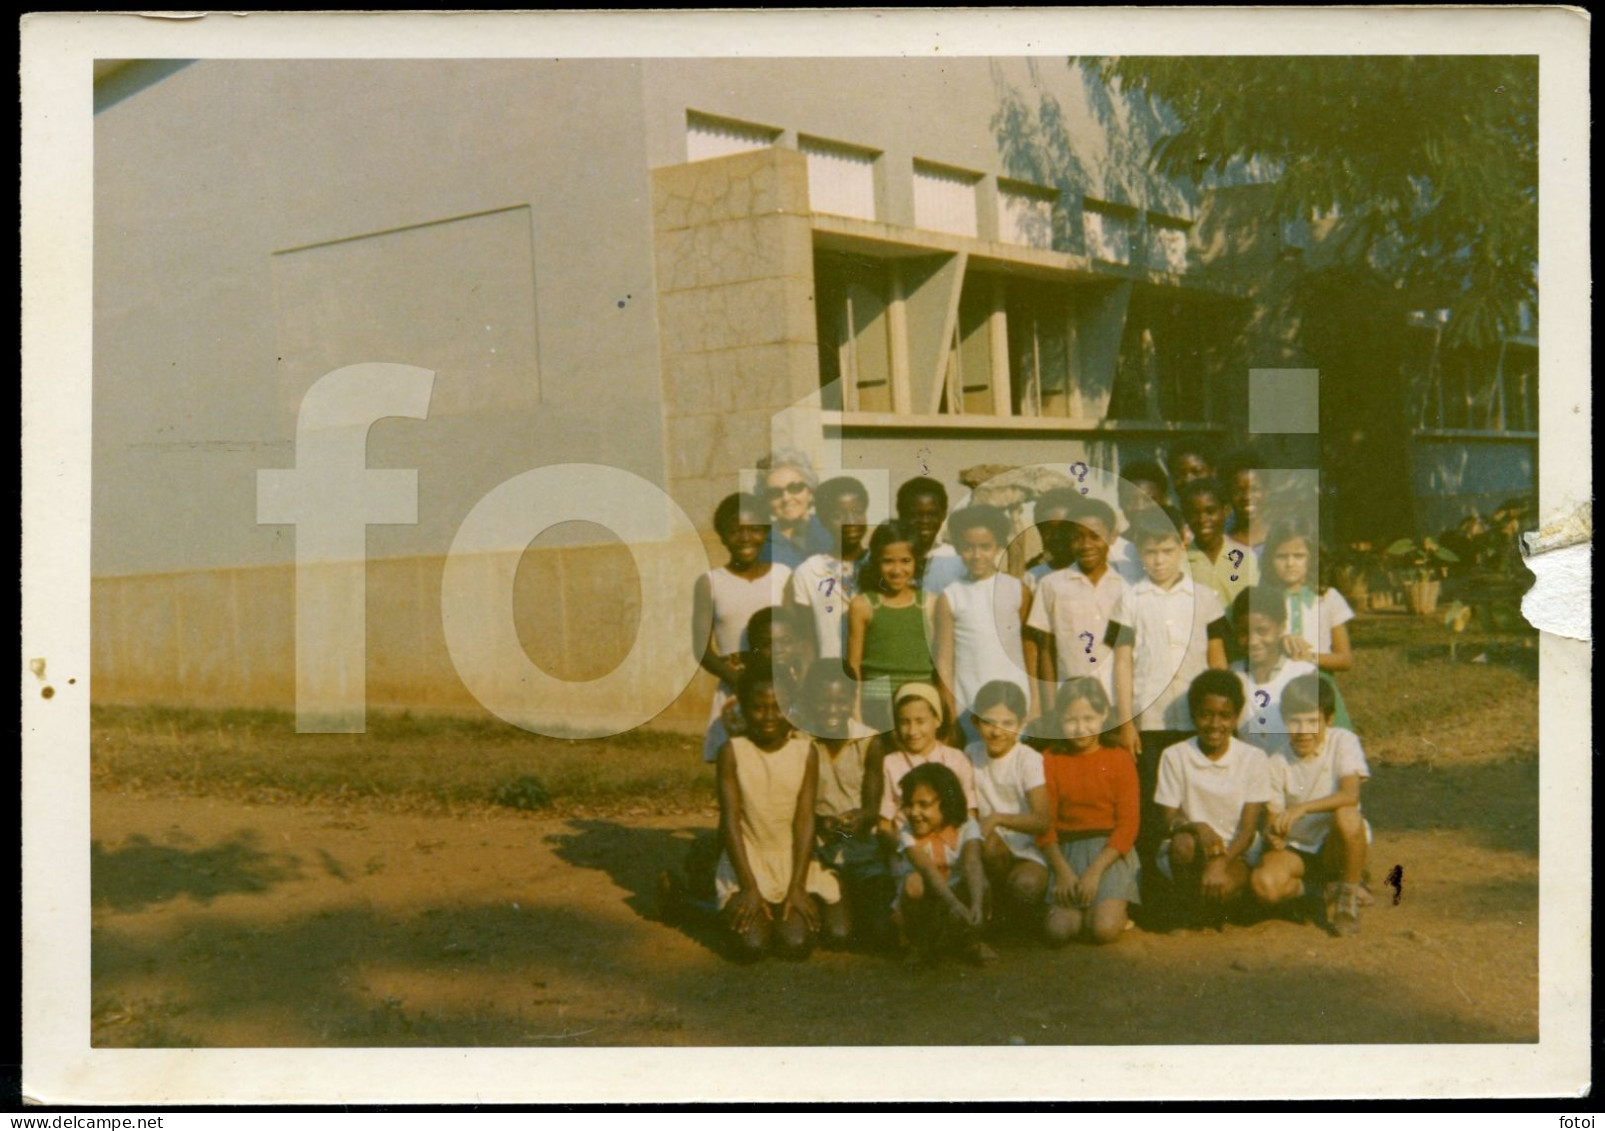 ESCOLA 211 SALAZAR 60s ORIGINAL PHOTO FOTO ESTUDANTES ESCOLA ALUNOS  SCHOOL AFRICA AFRIQUE AT200 - Afrique